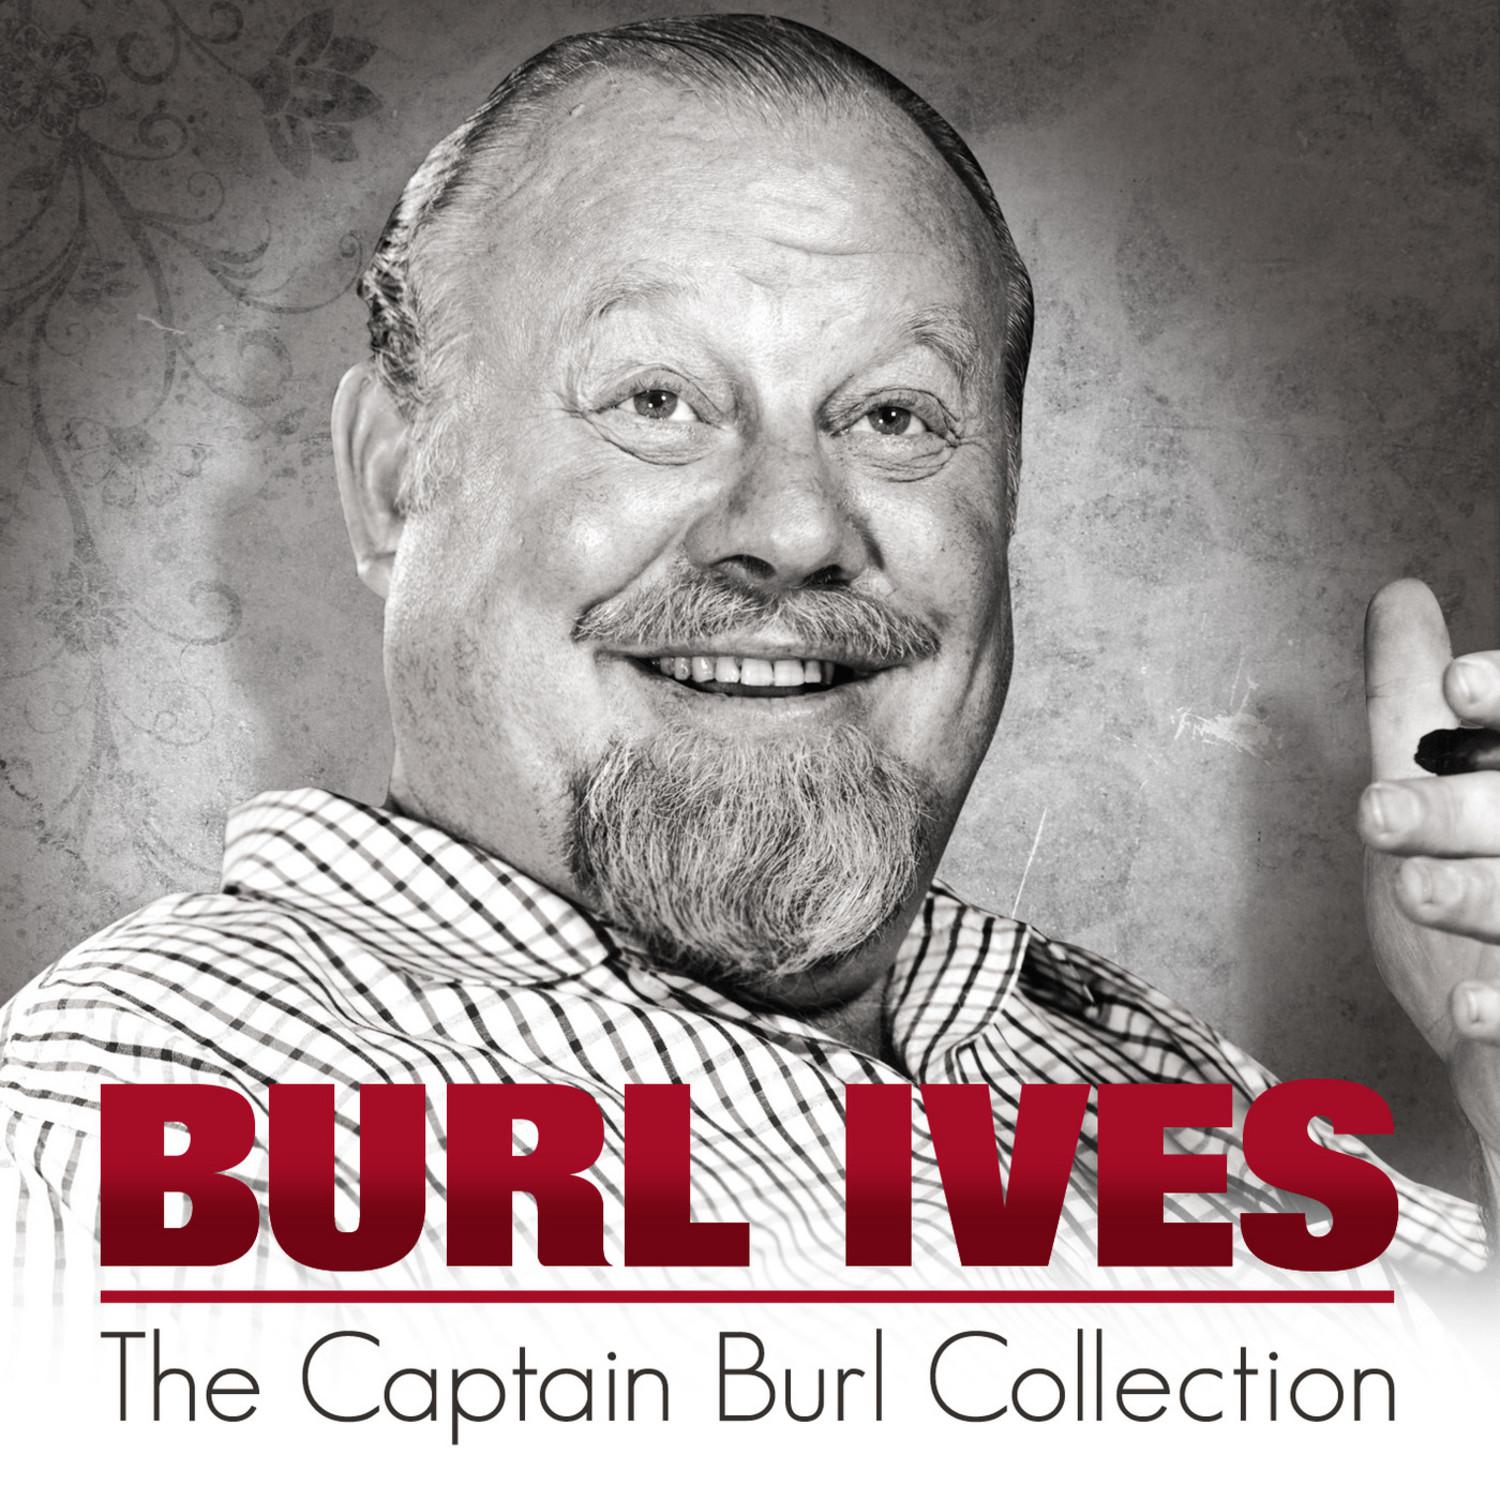 The Captain Burl Collection